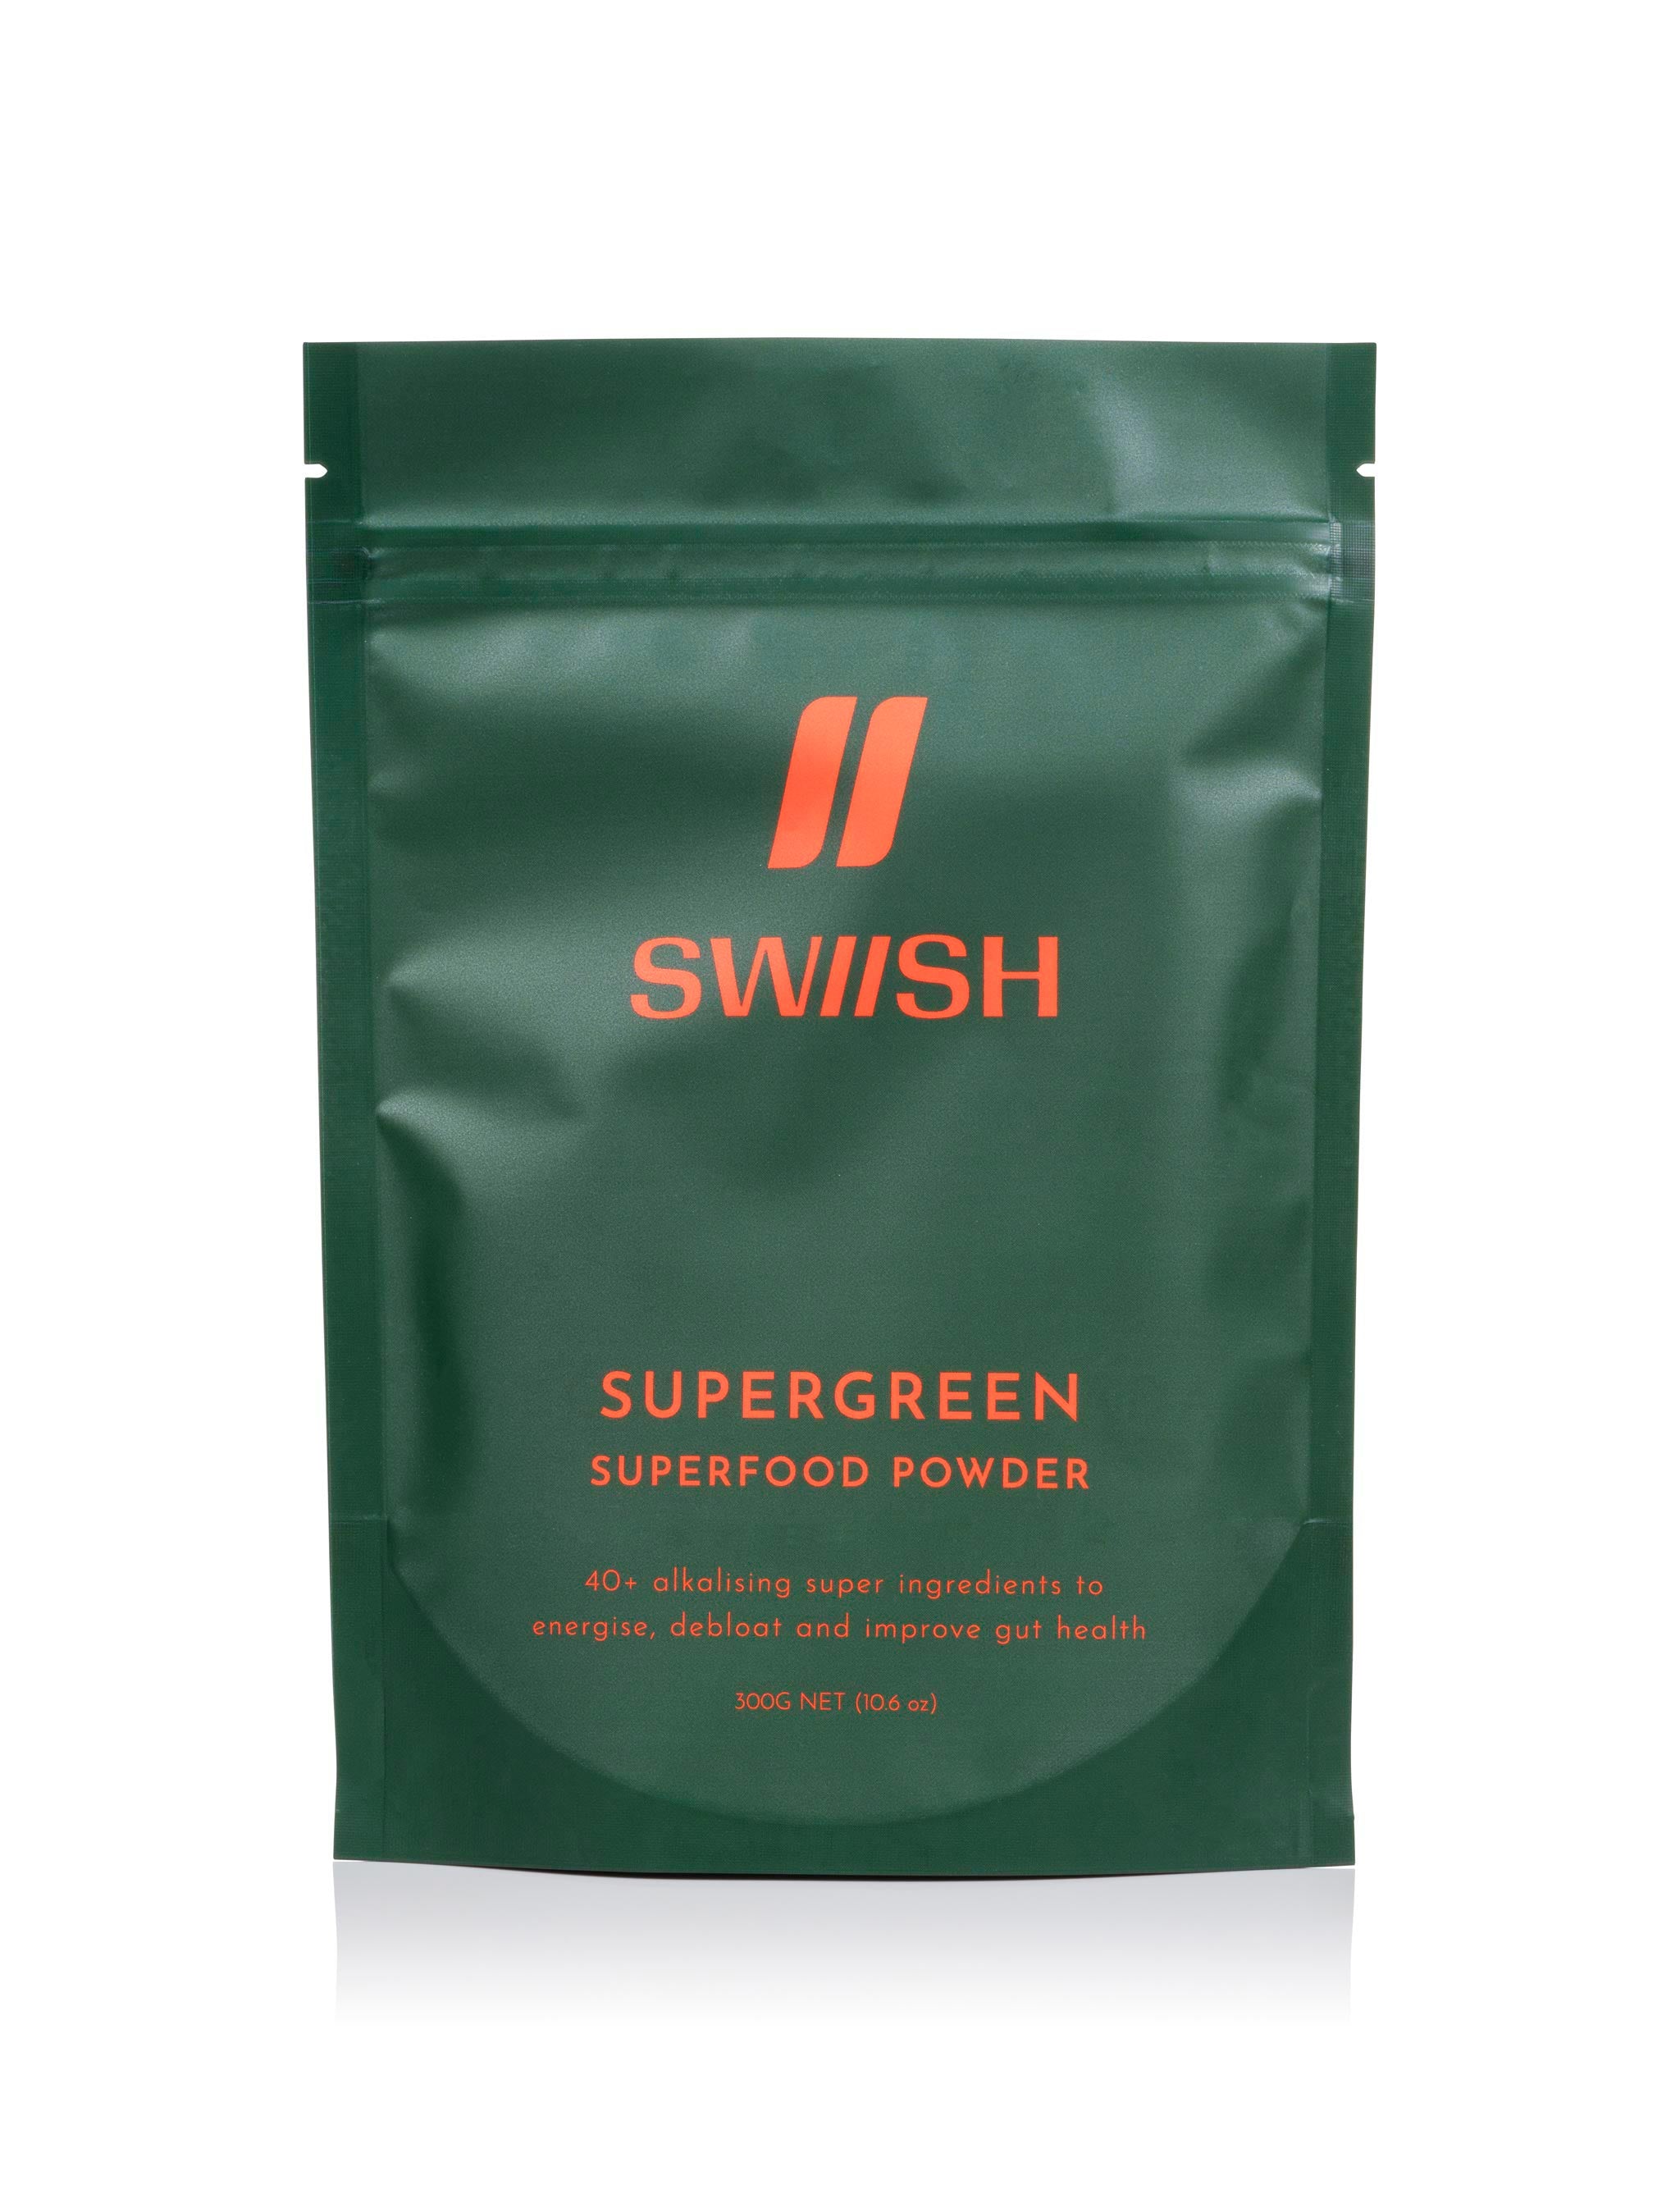 Green powder | superfood supplements